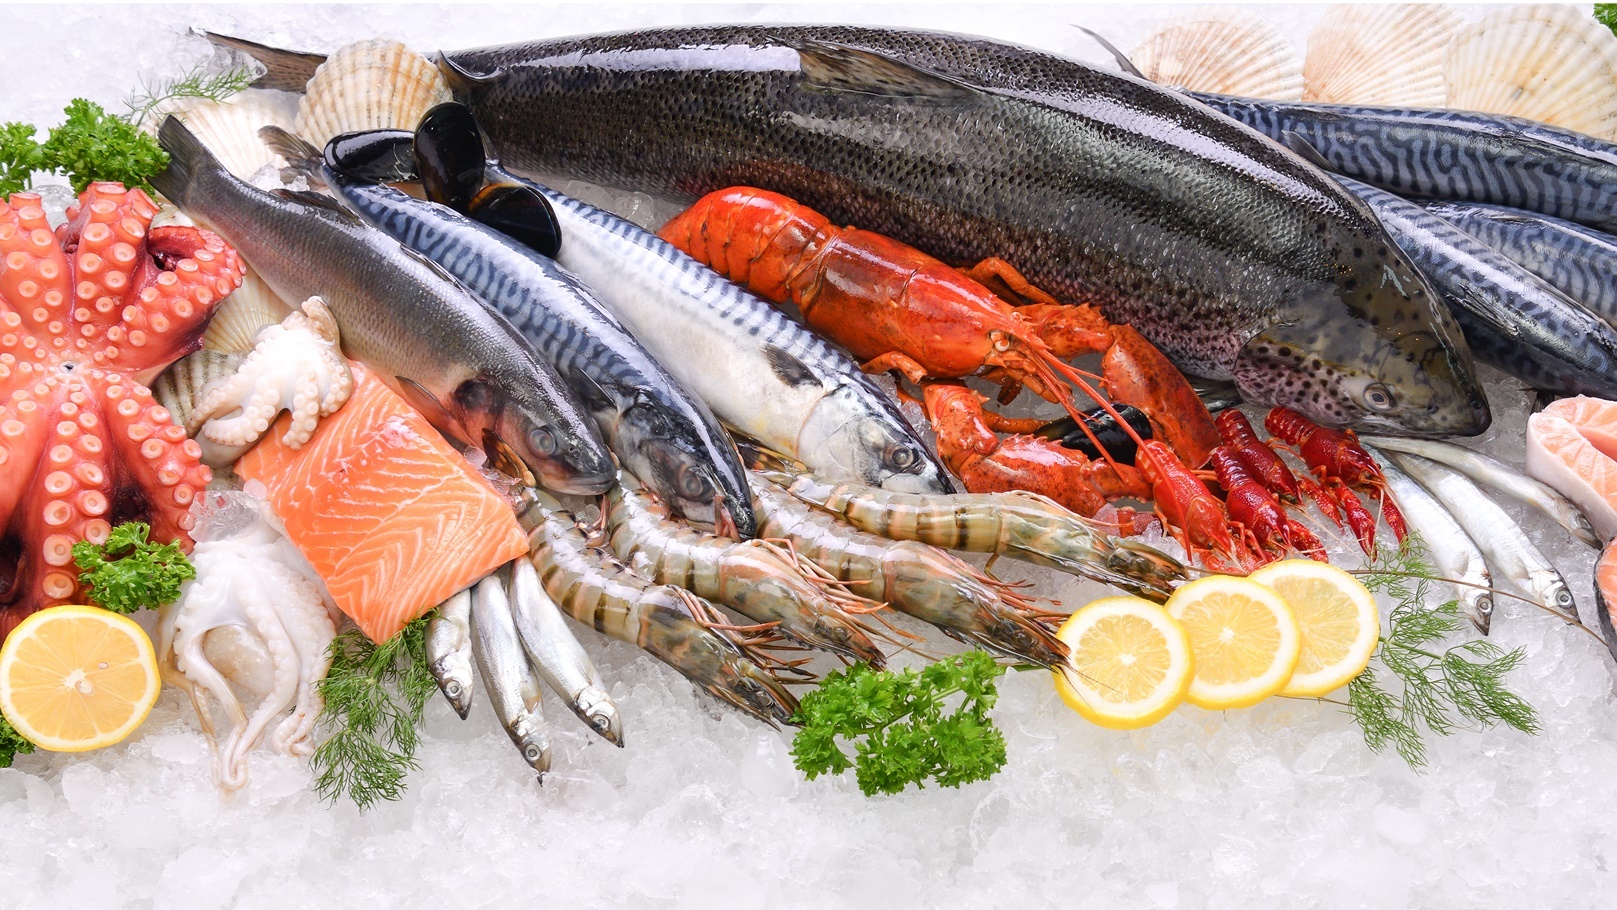 seafood-fish-2021-08-28-20-03-17-utc